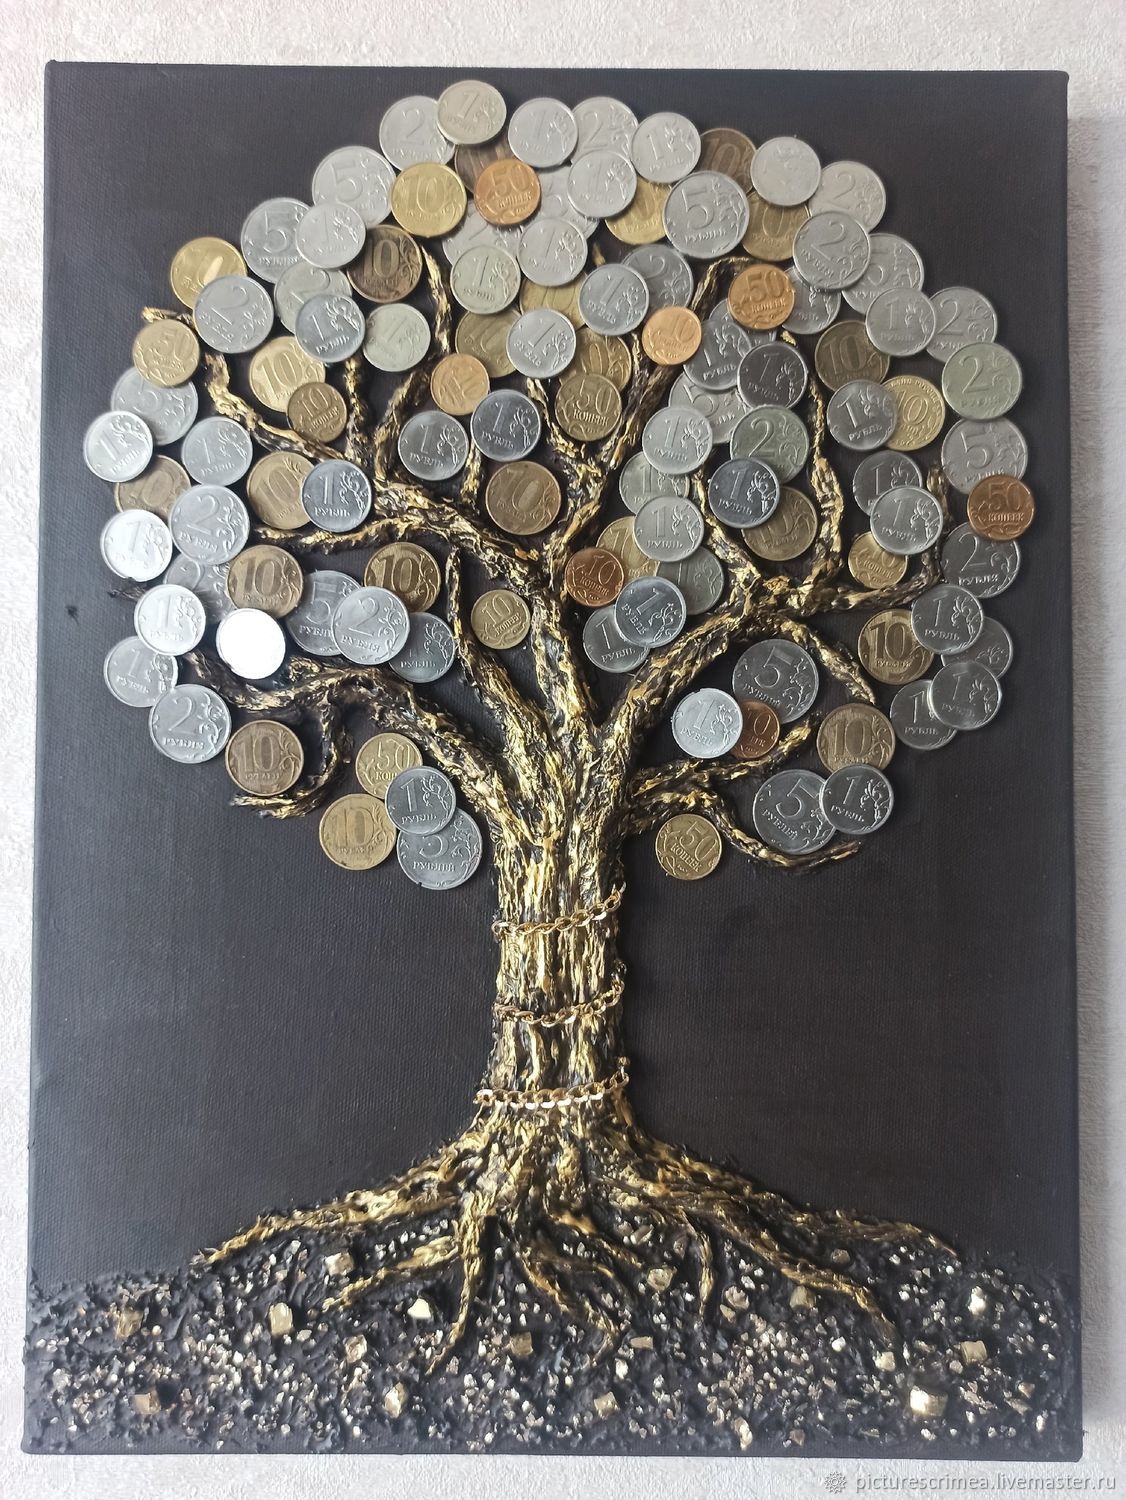 Картина денежное дерево, панно из монет, подарок и сувенир